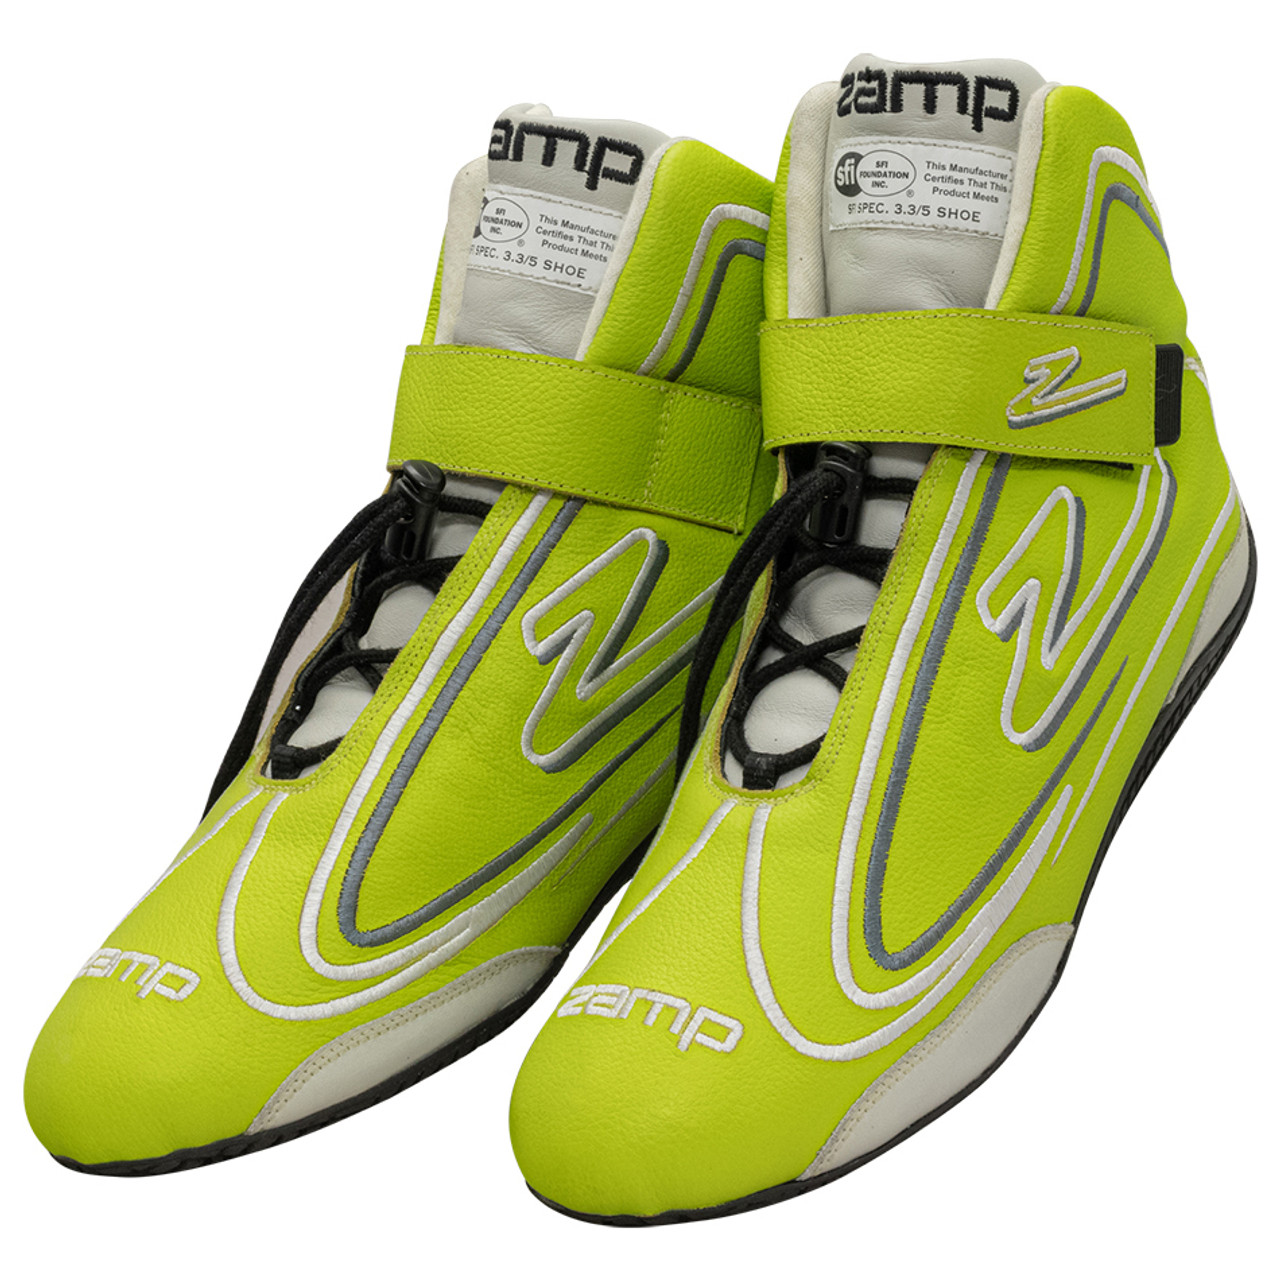 Shoe ZR-50 Neon Green Size 9 SFI 3.3/5